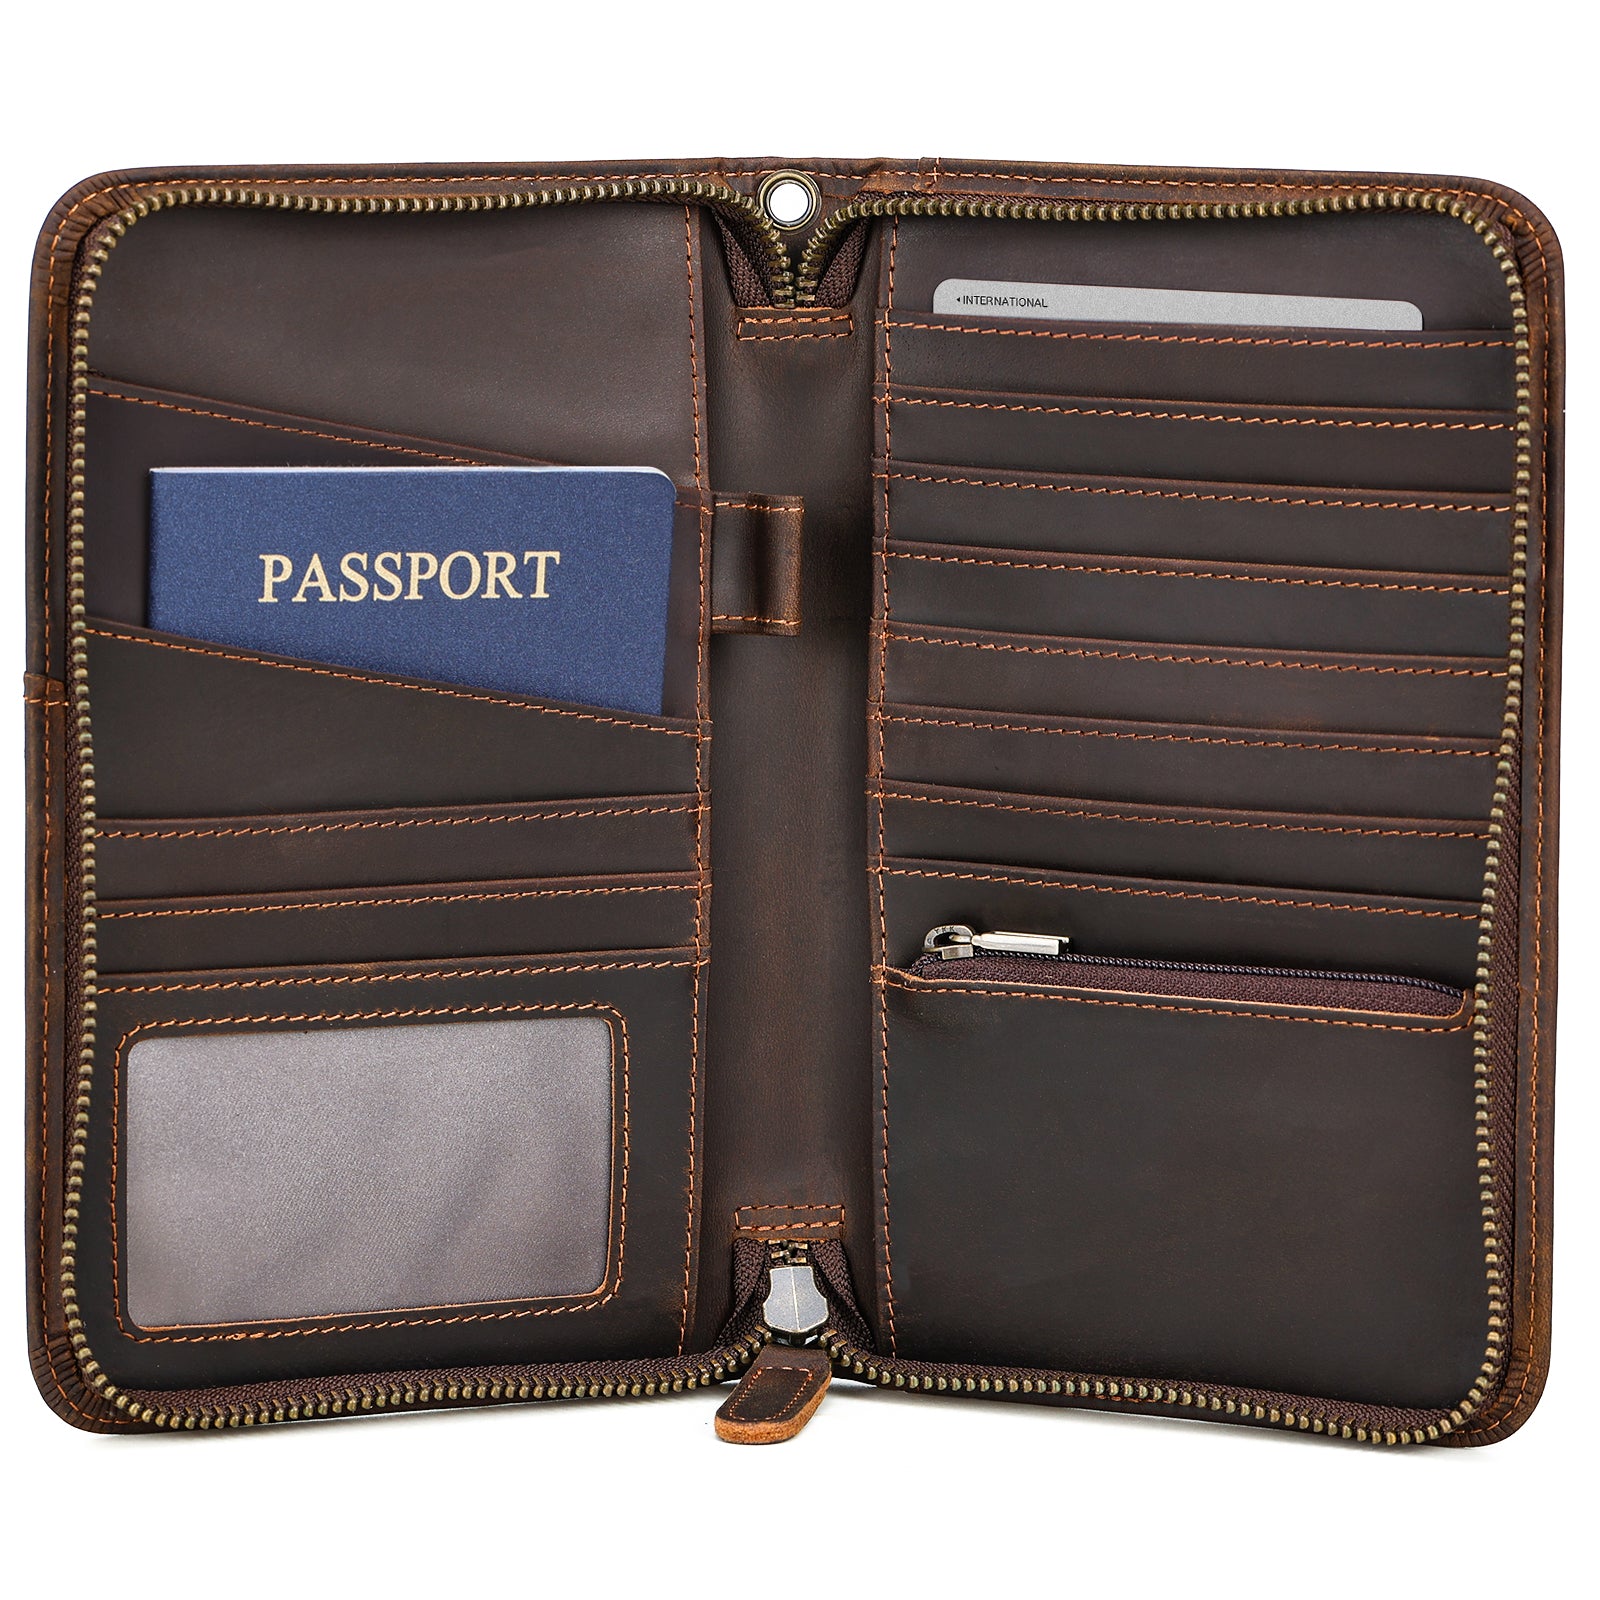 Polare Full Grain Leather Travel Passport Holder Wallet Fits 2 Passports